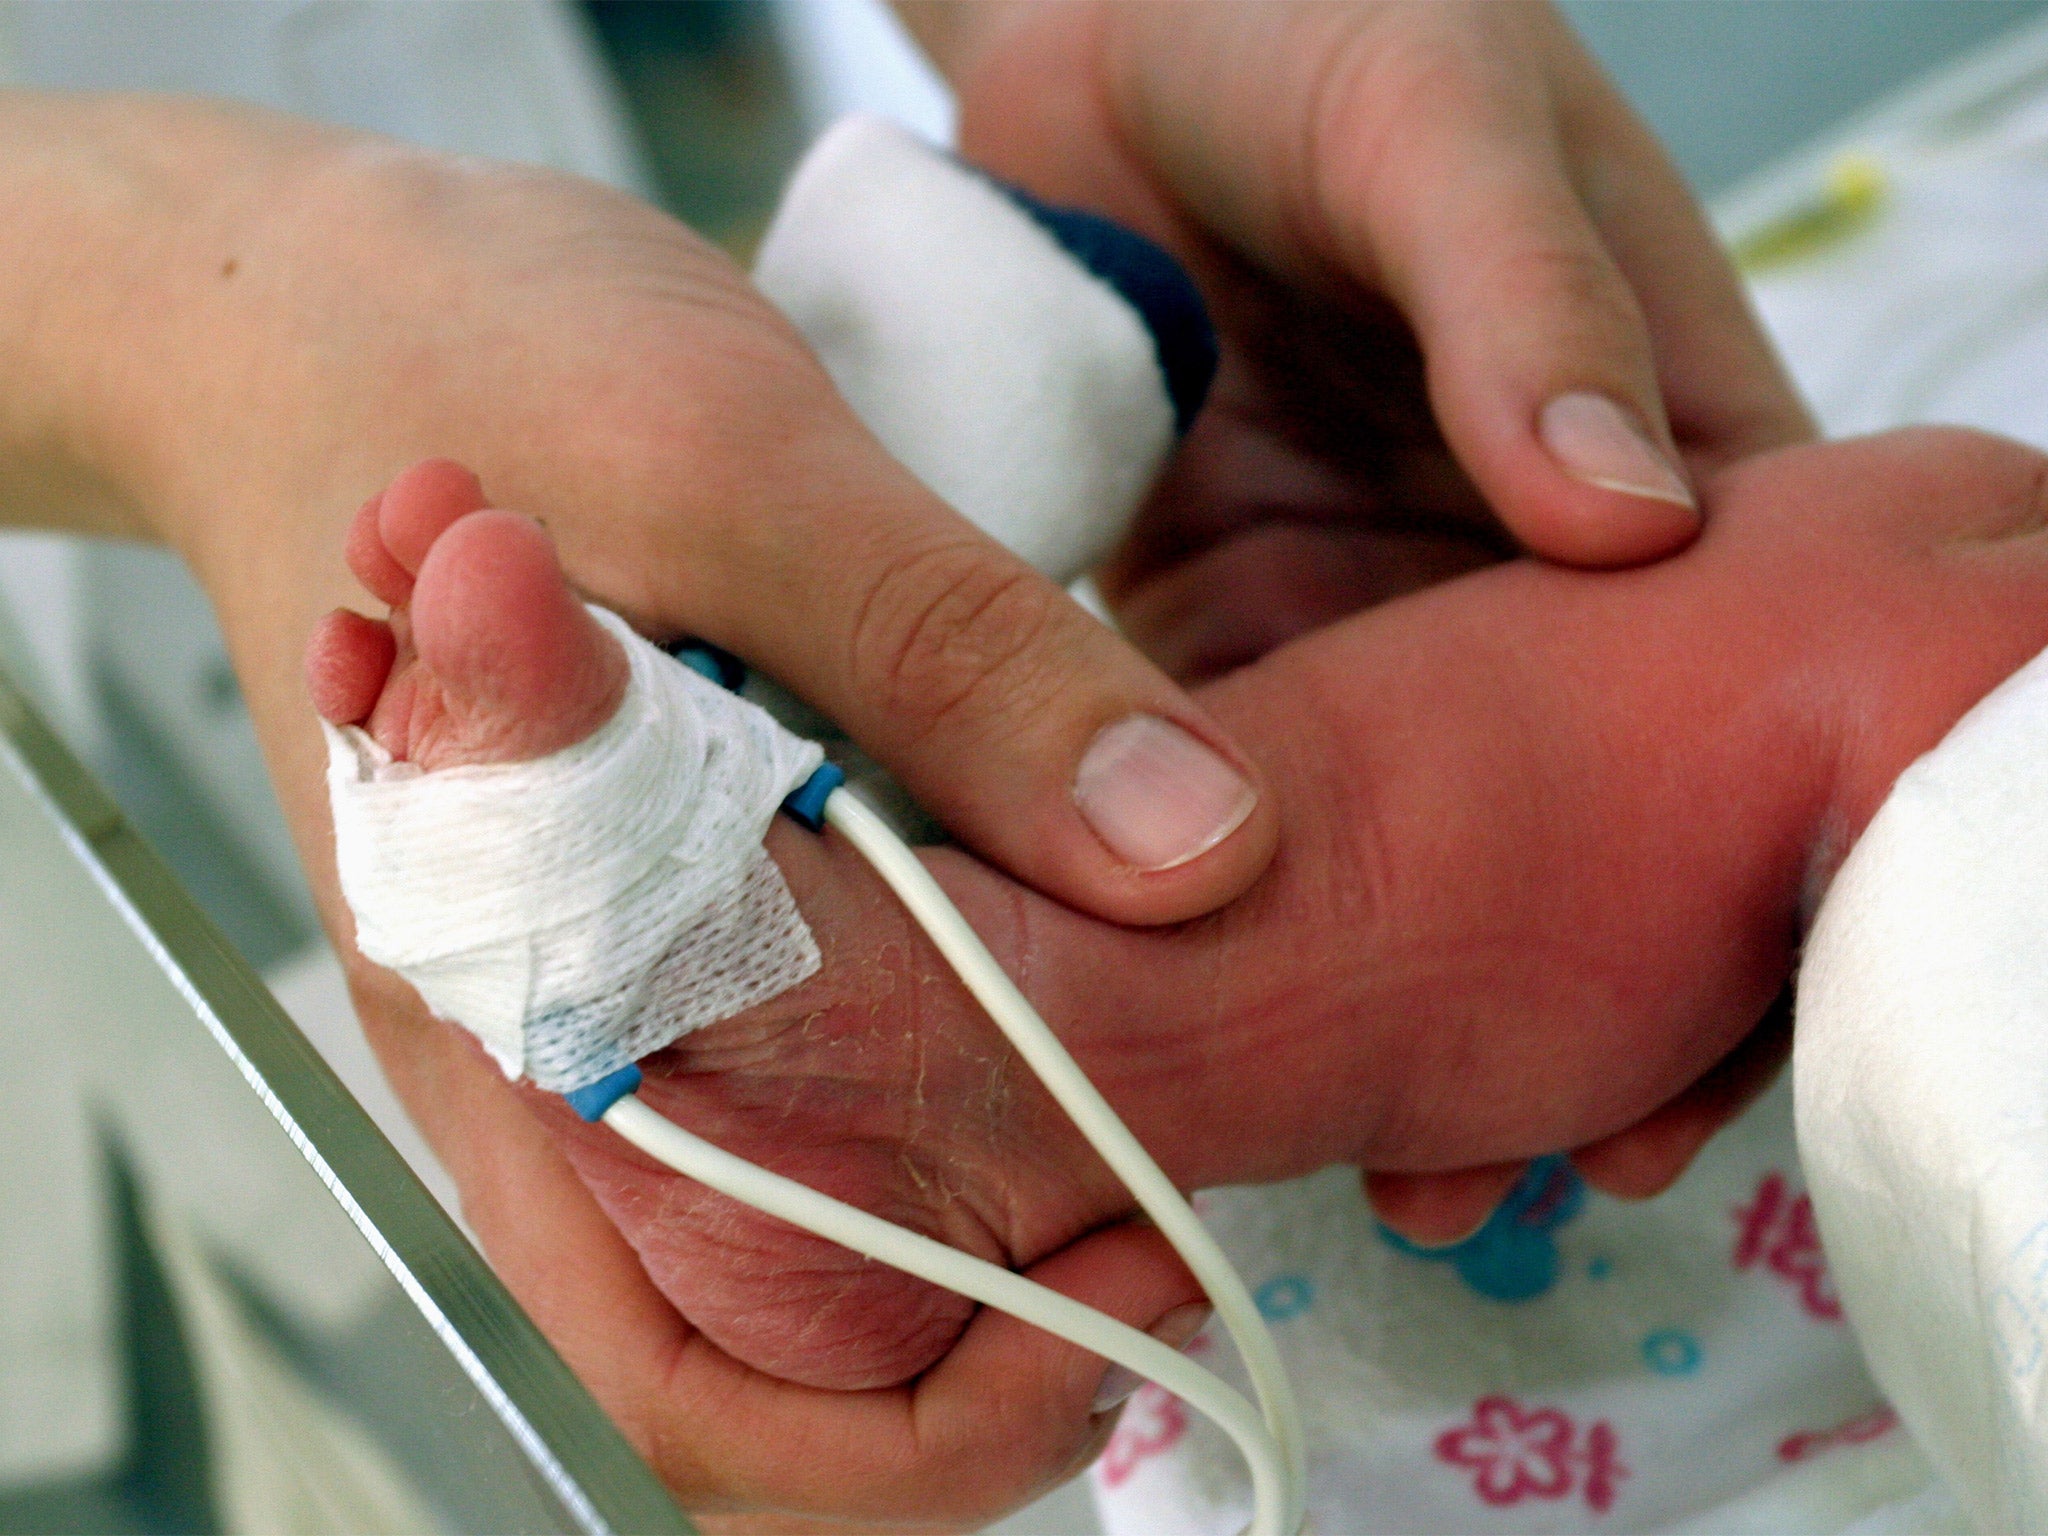 A premature baby in intensive care